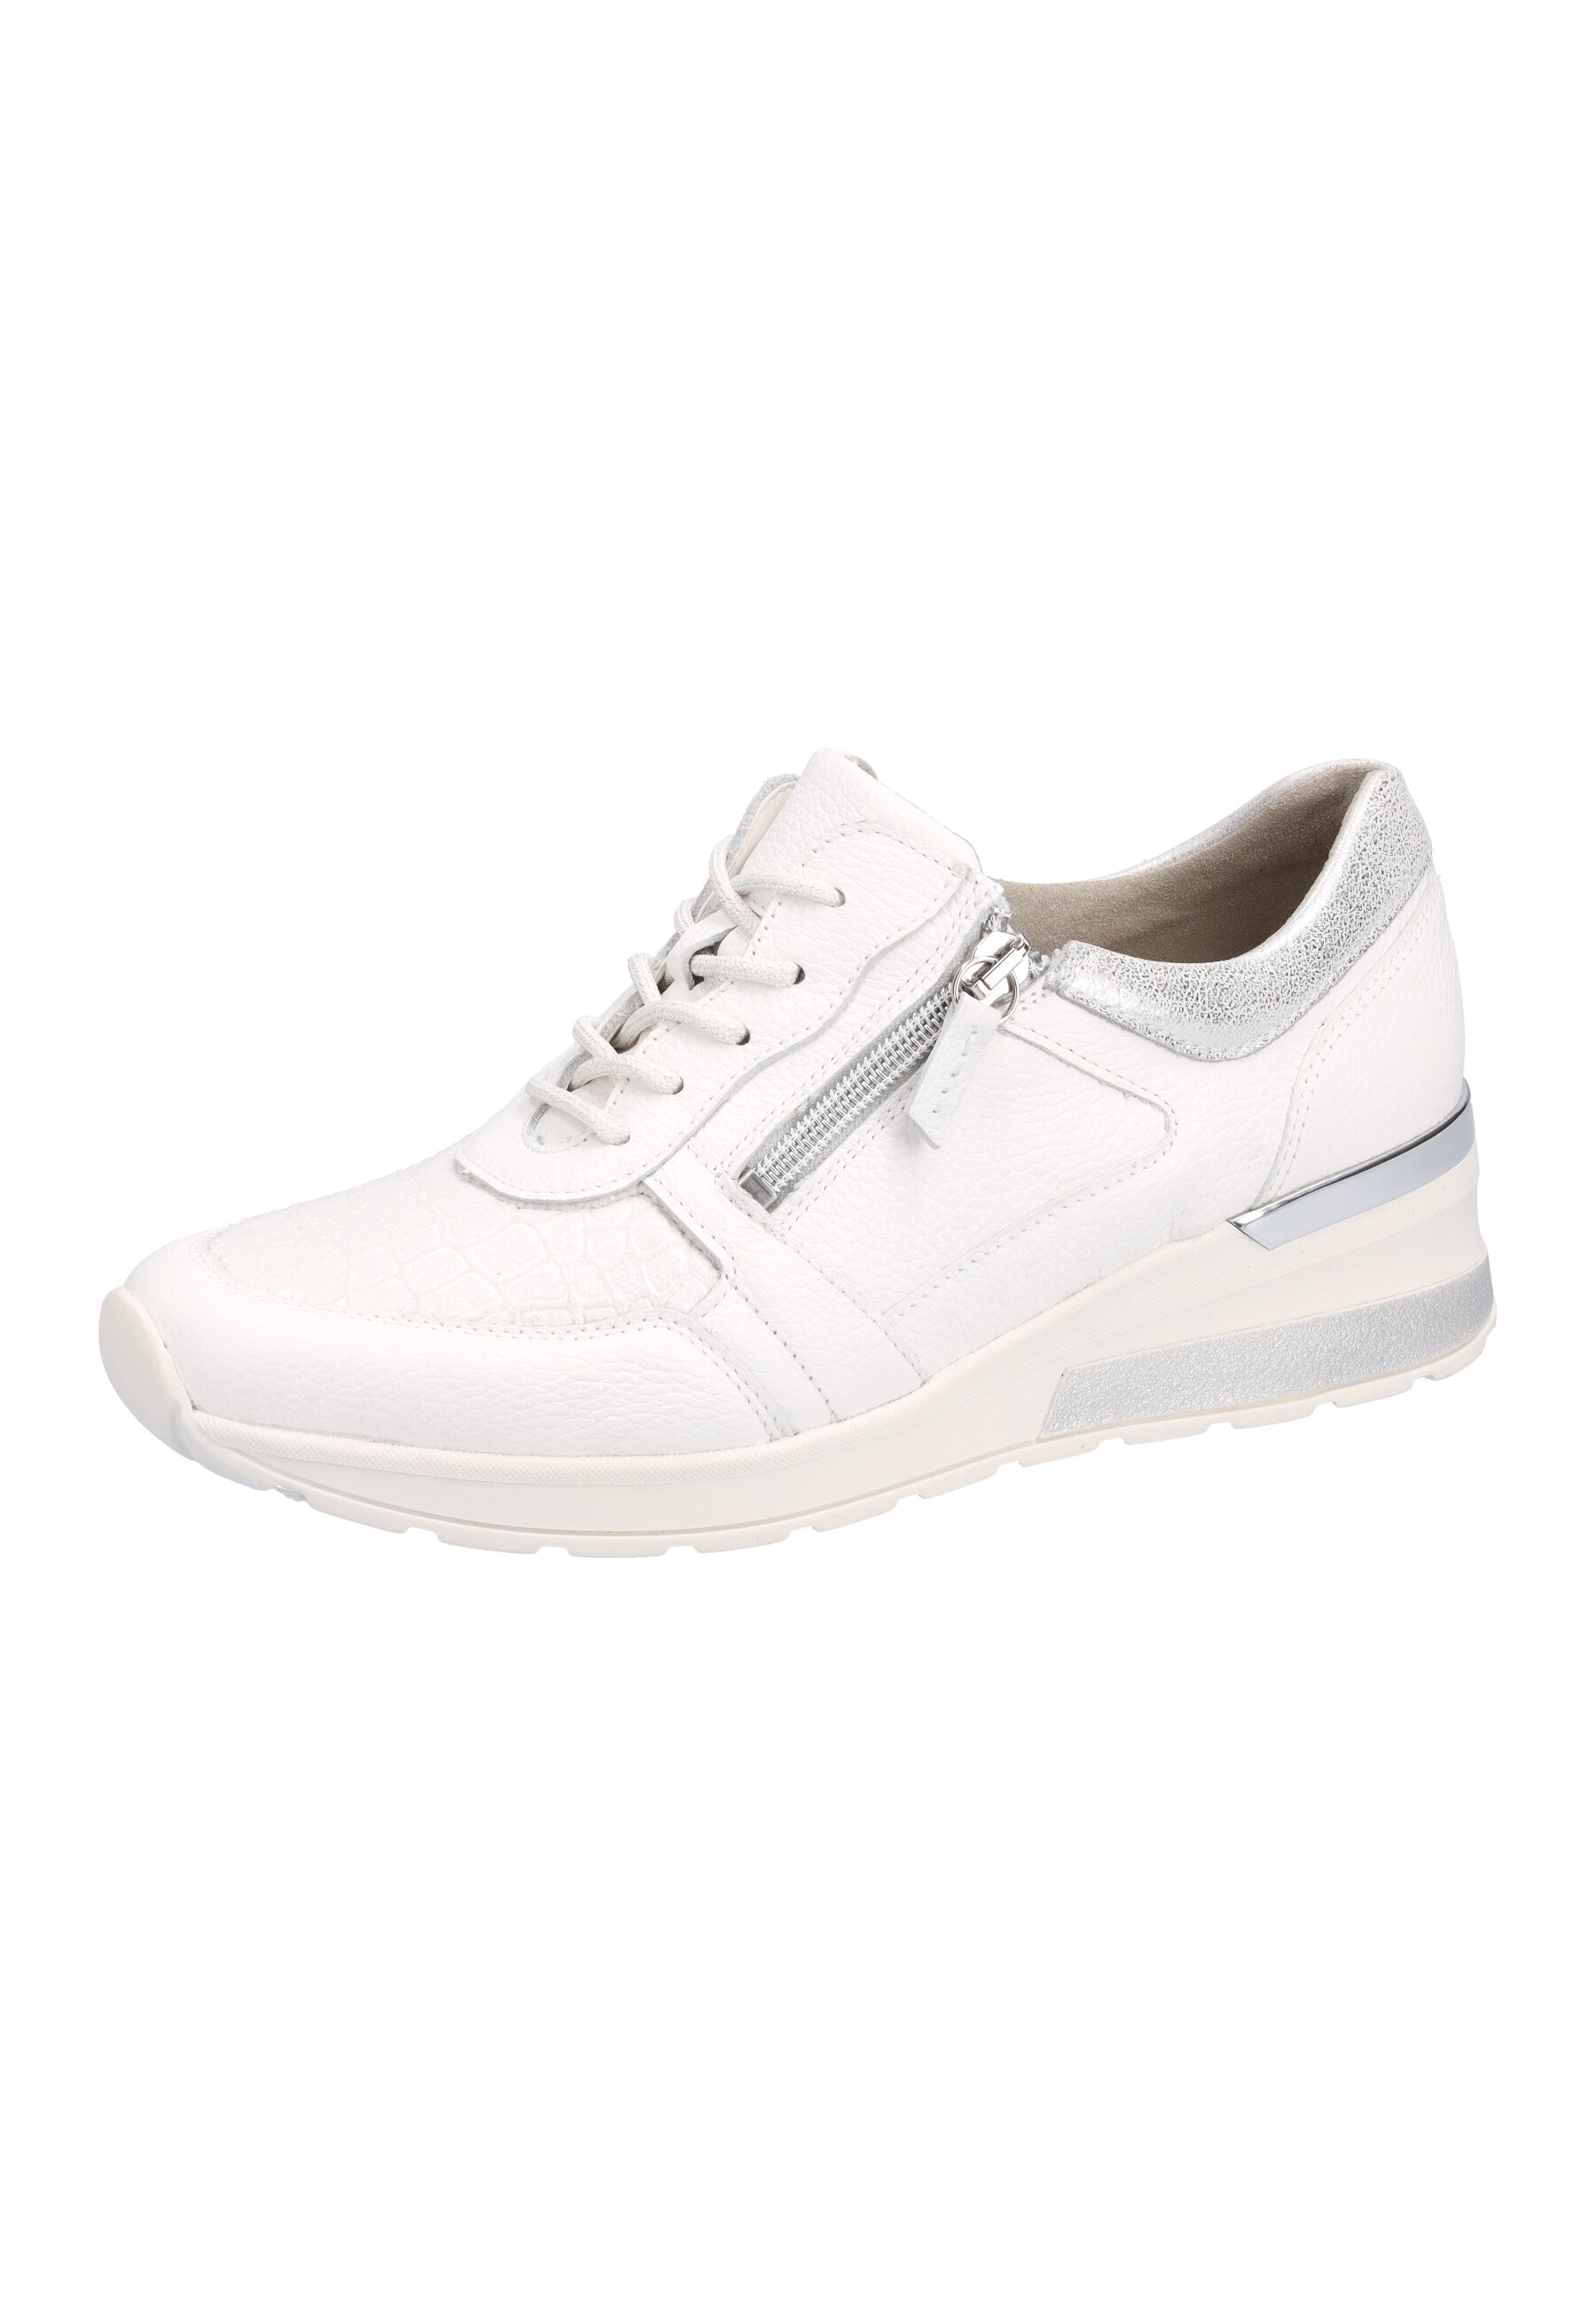 Waldlaufer 939H01 308 150 H-Clara White & Silver Trim Sneakers with Zi ...